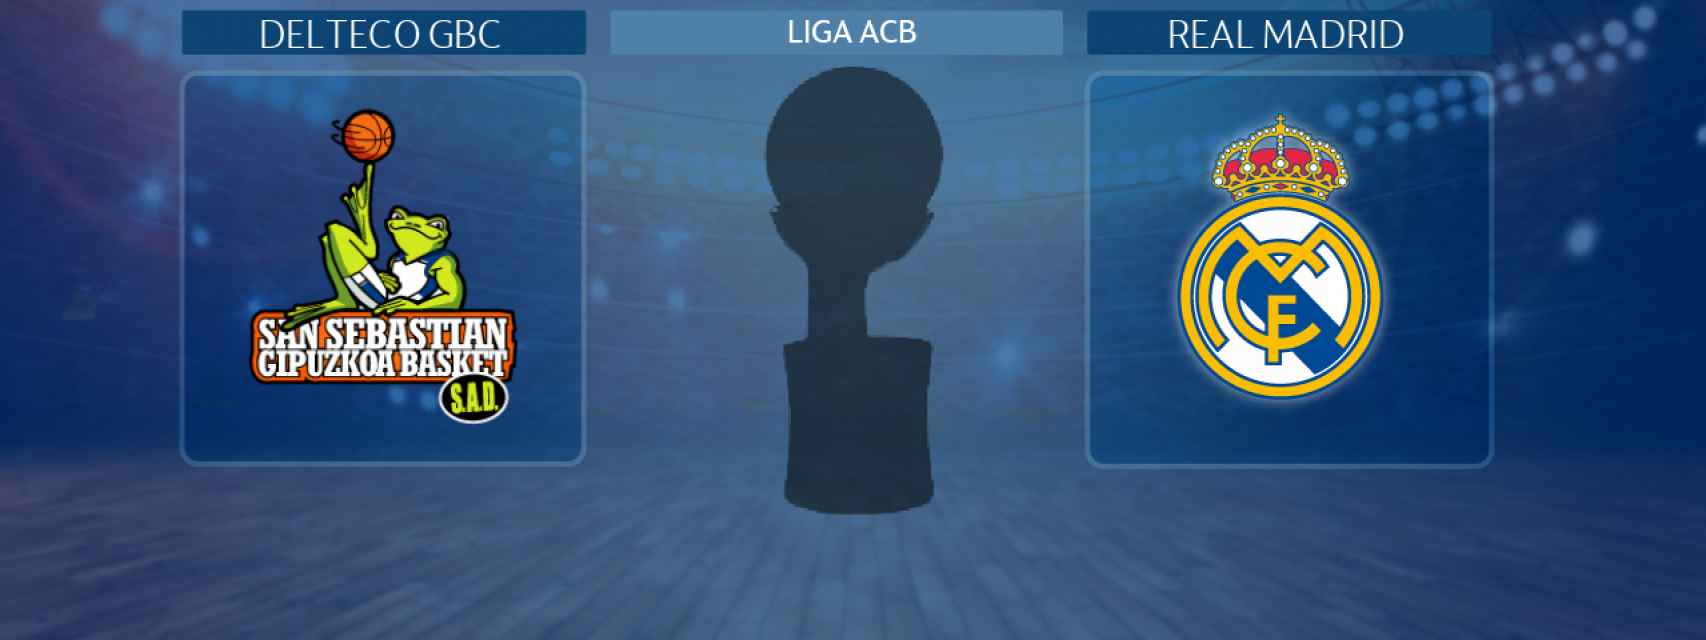 Delteco GBC - Real Madrid, partido de la Liga ACB